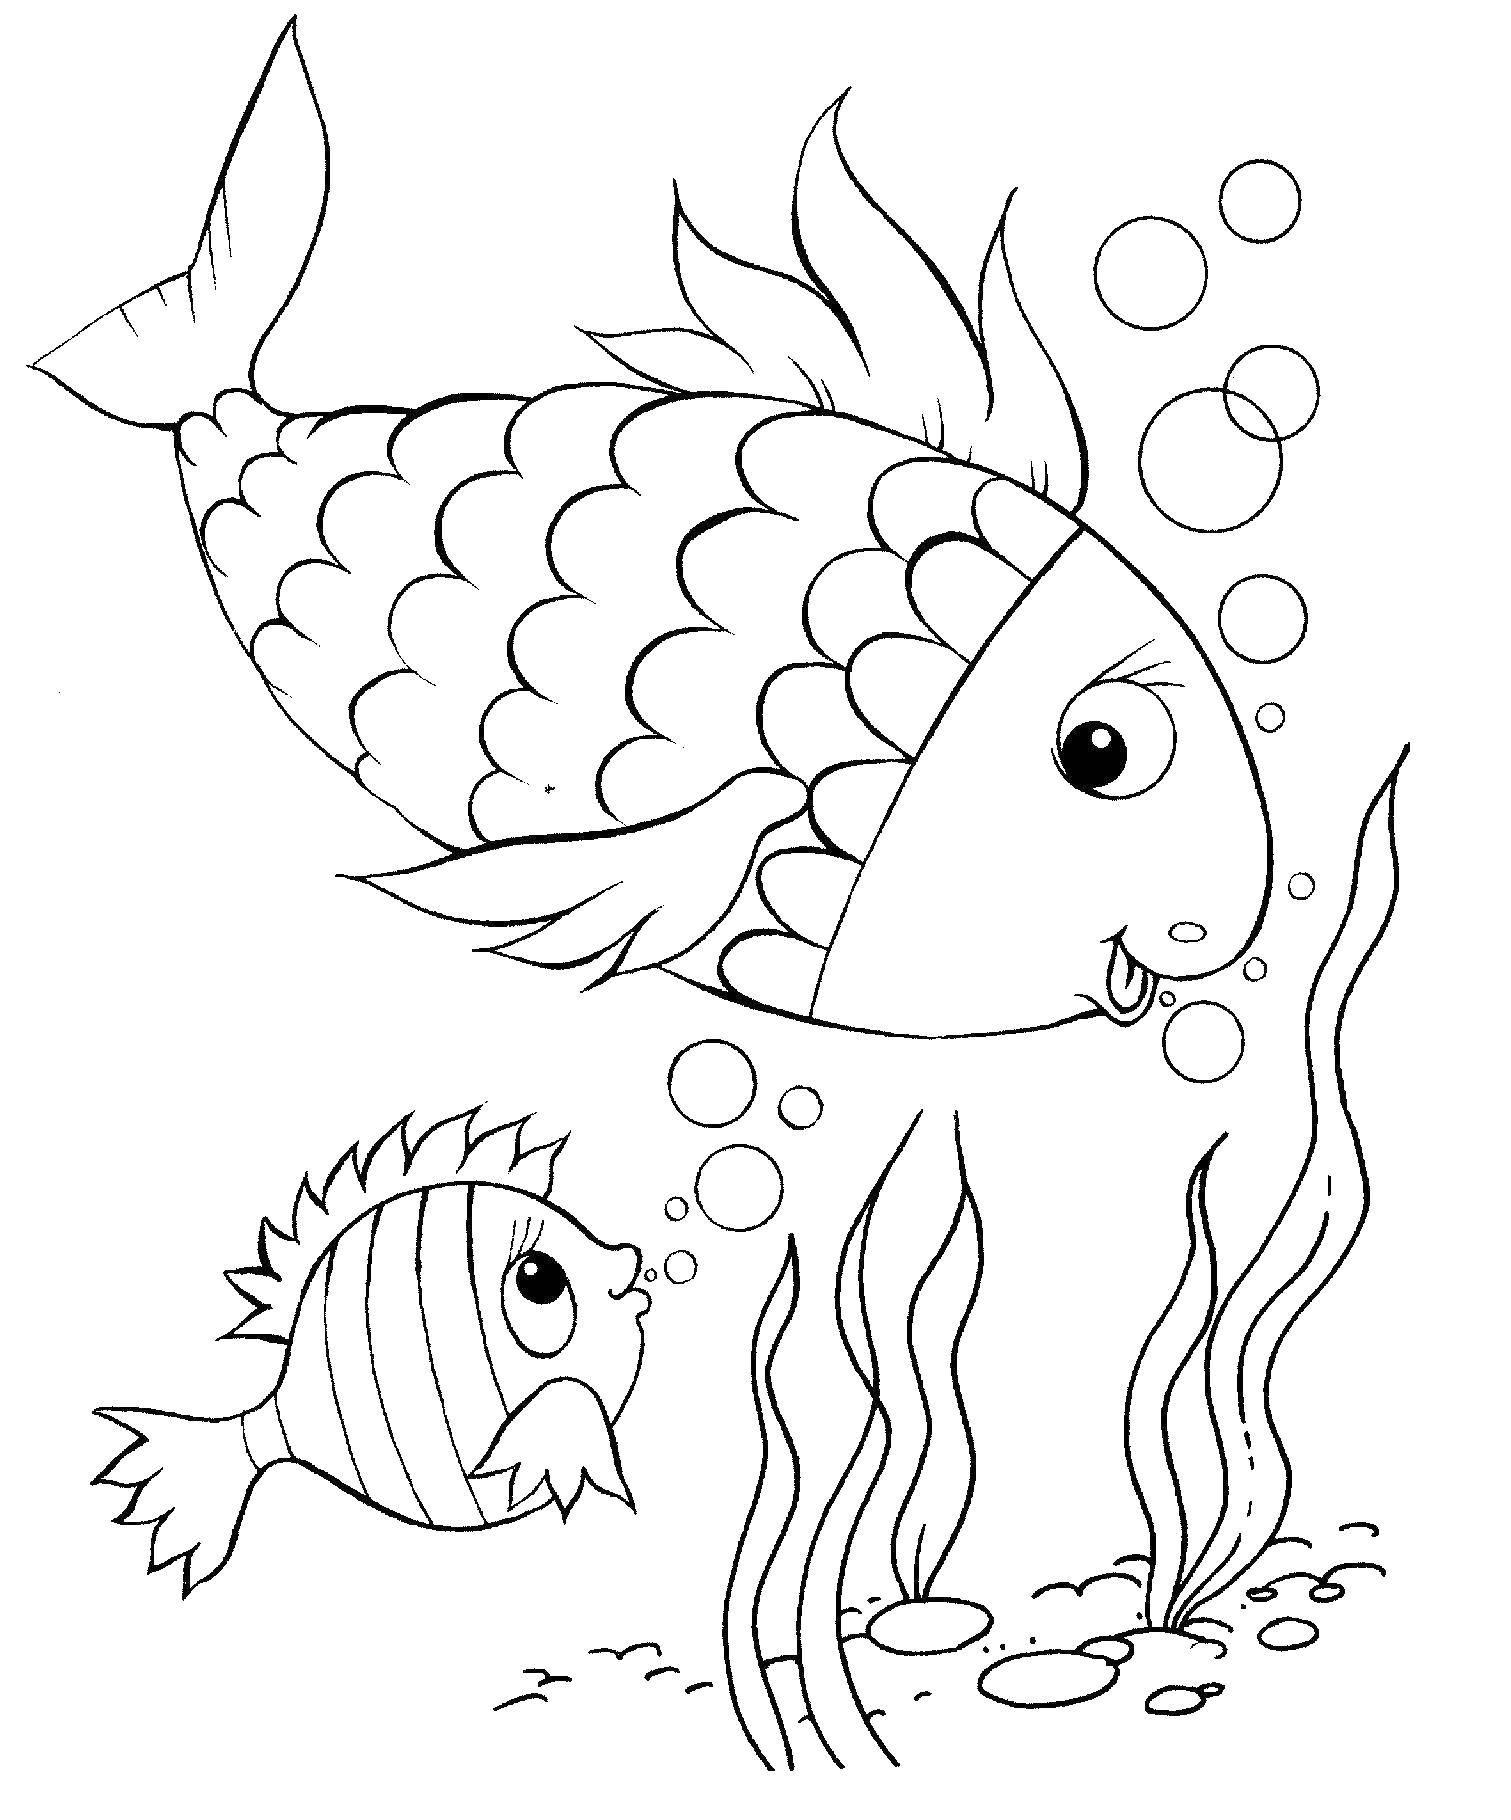 Название: Раскраска Две рыбки в море около дна с водорослями.. Категория: рыбы. Теги: рыбки, море.